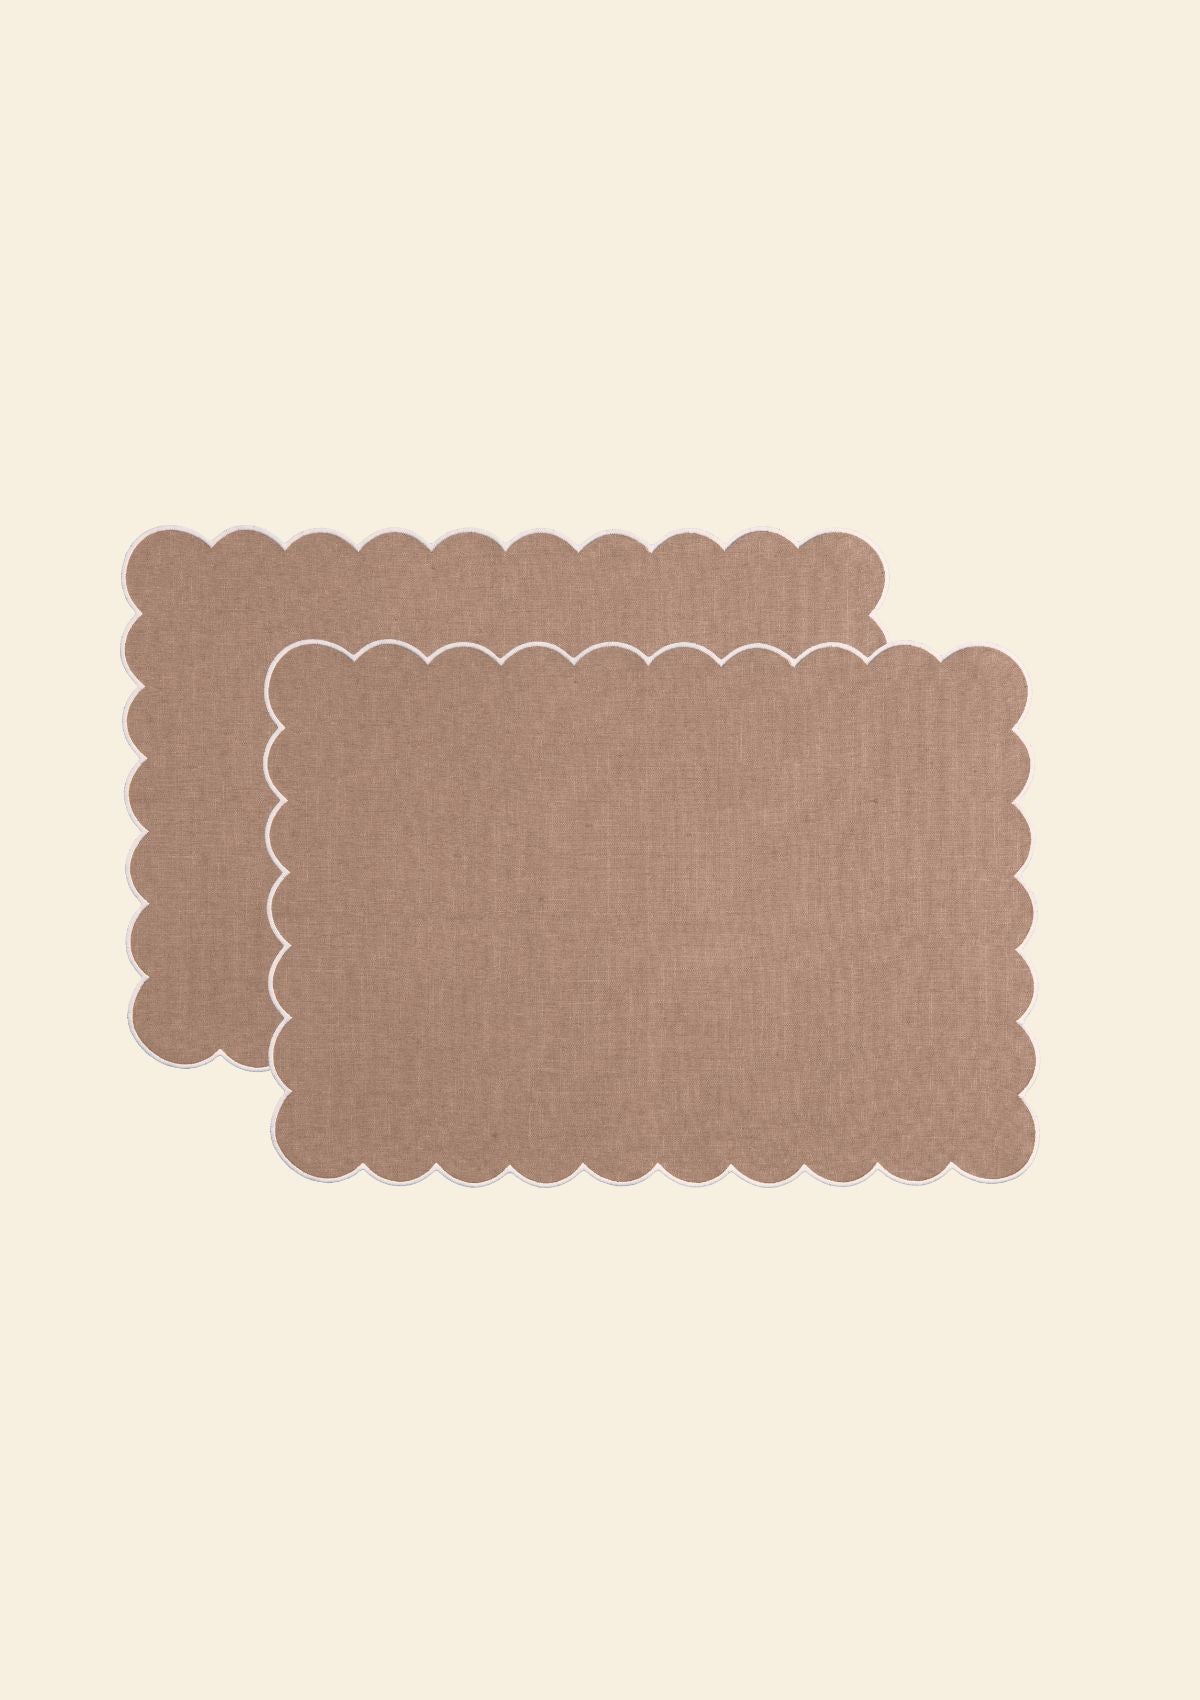 Scalloped rectangular placemats in Powder pink & White linen